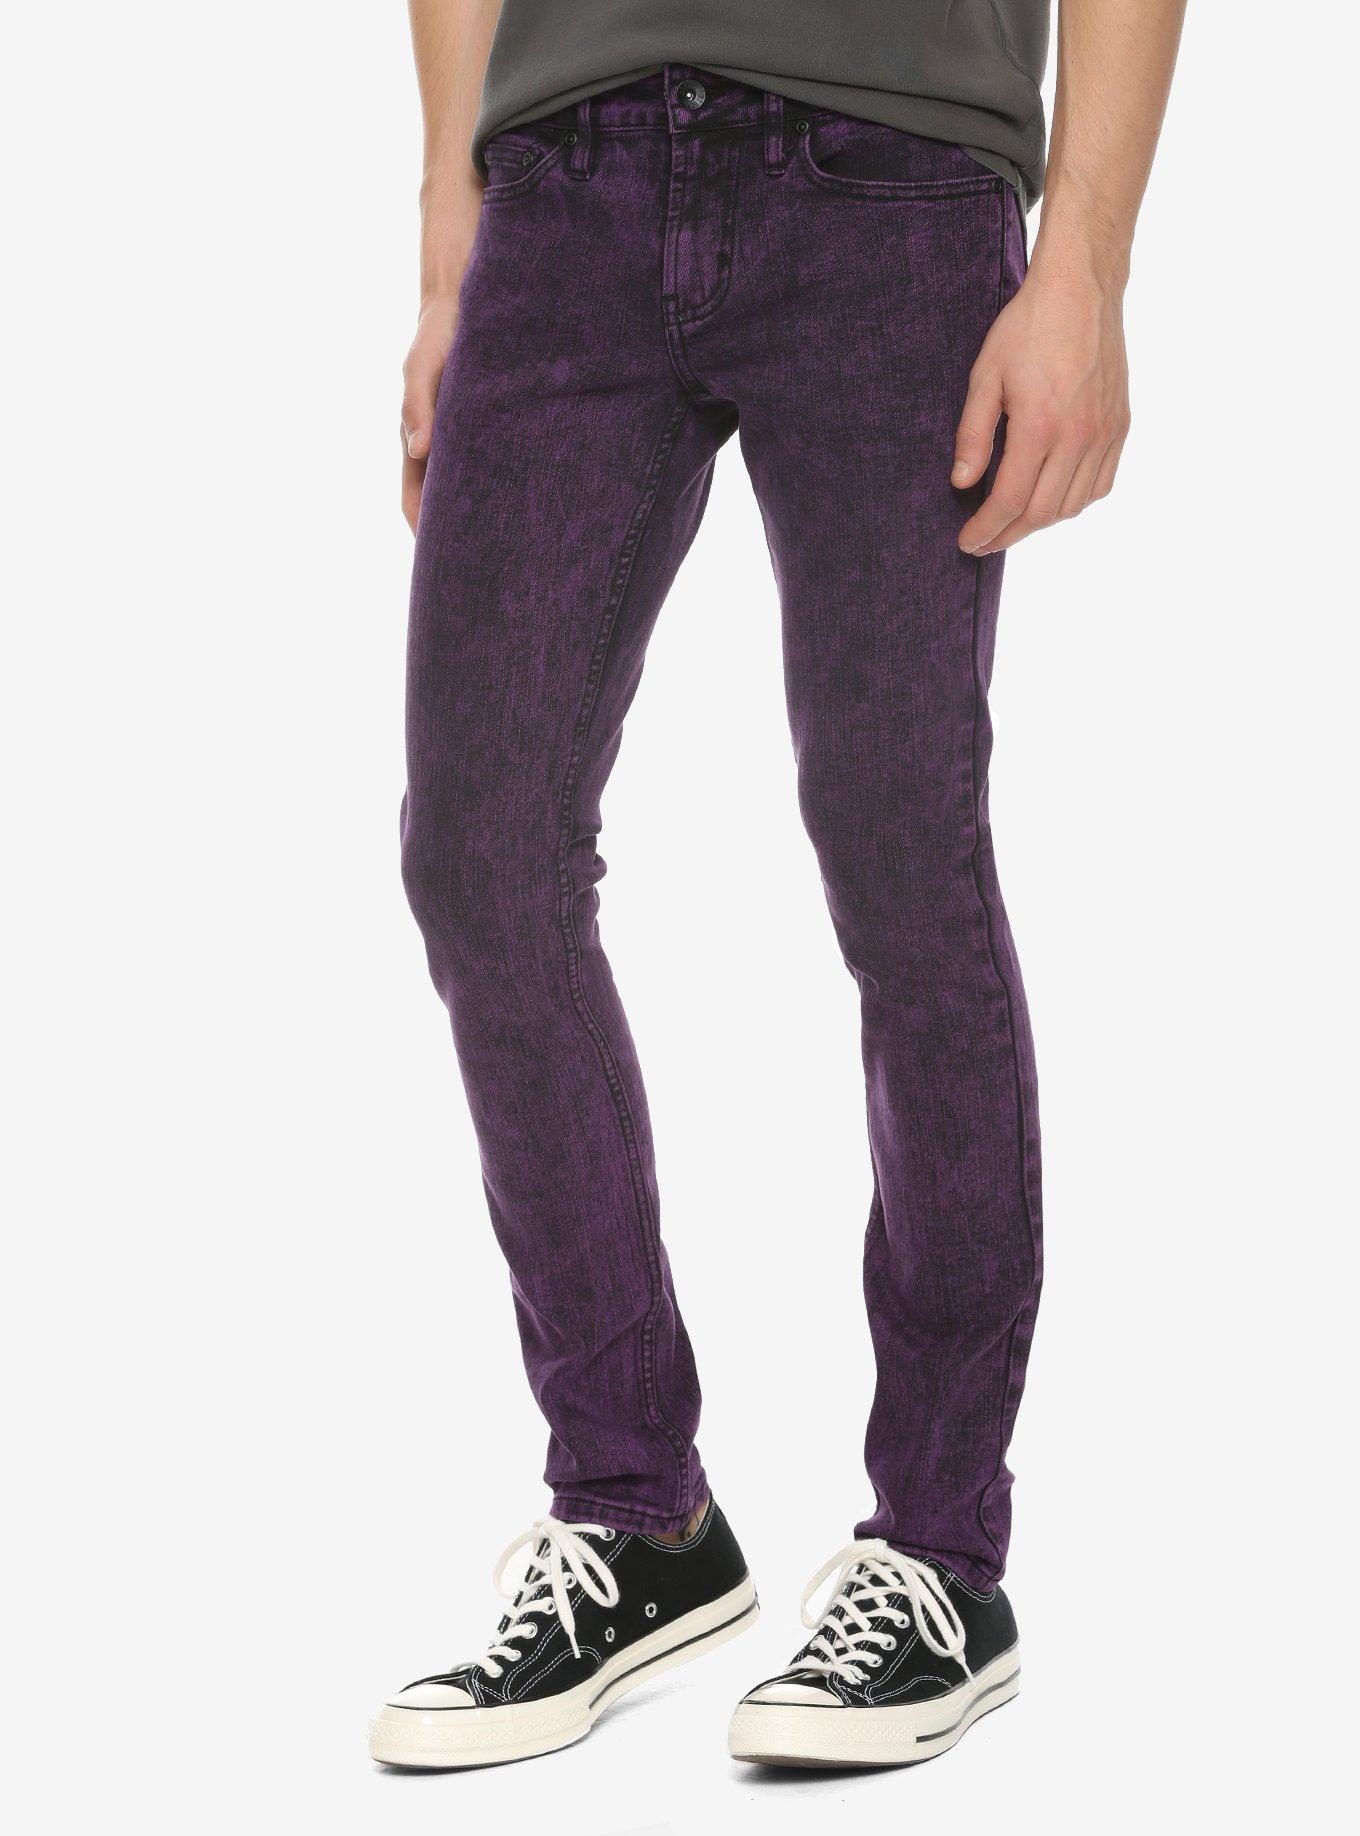 Dr. Denim Skinny Jeans in Red Metallic in Purple